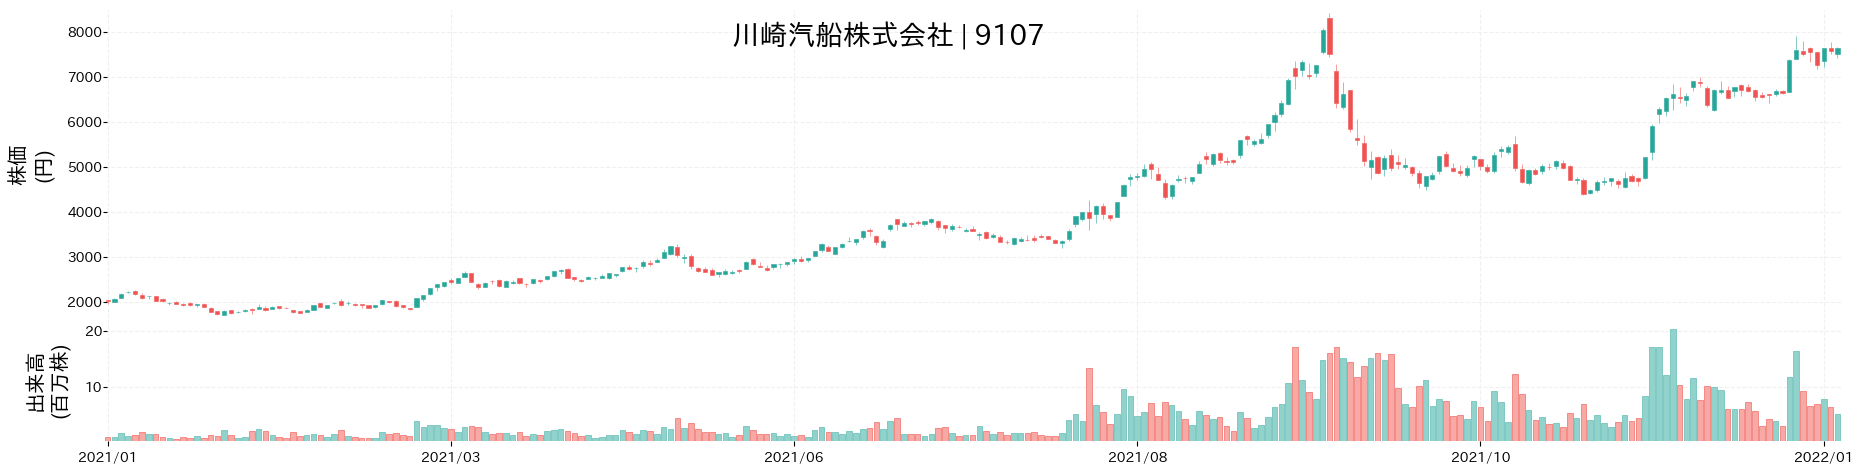 川崎汽船の株価推移(2021)